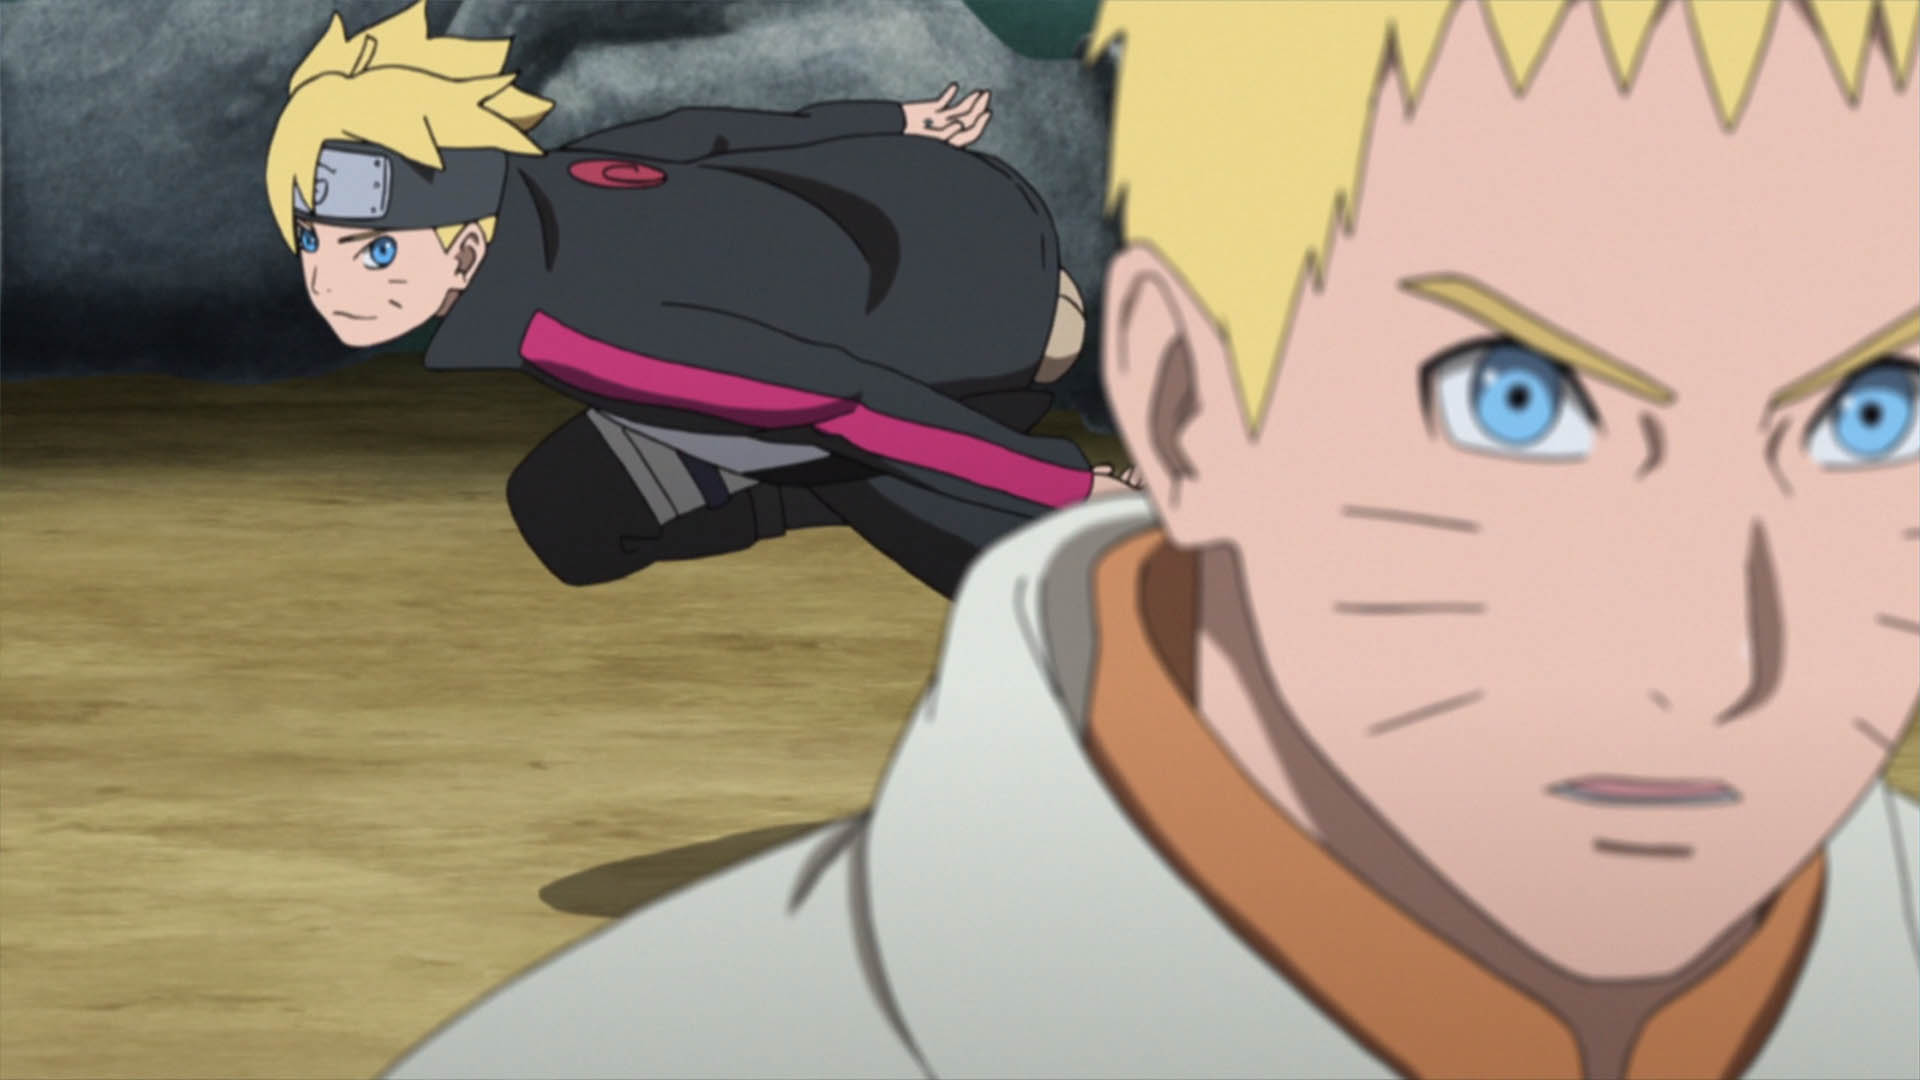 Boruto - Episódio 181 mostra Naruto enfrentando seu filho